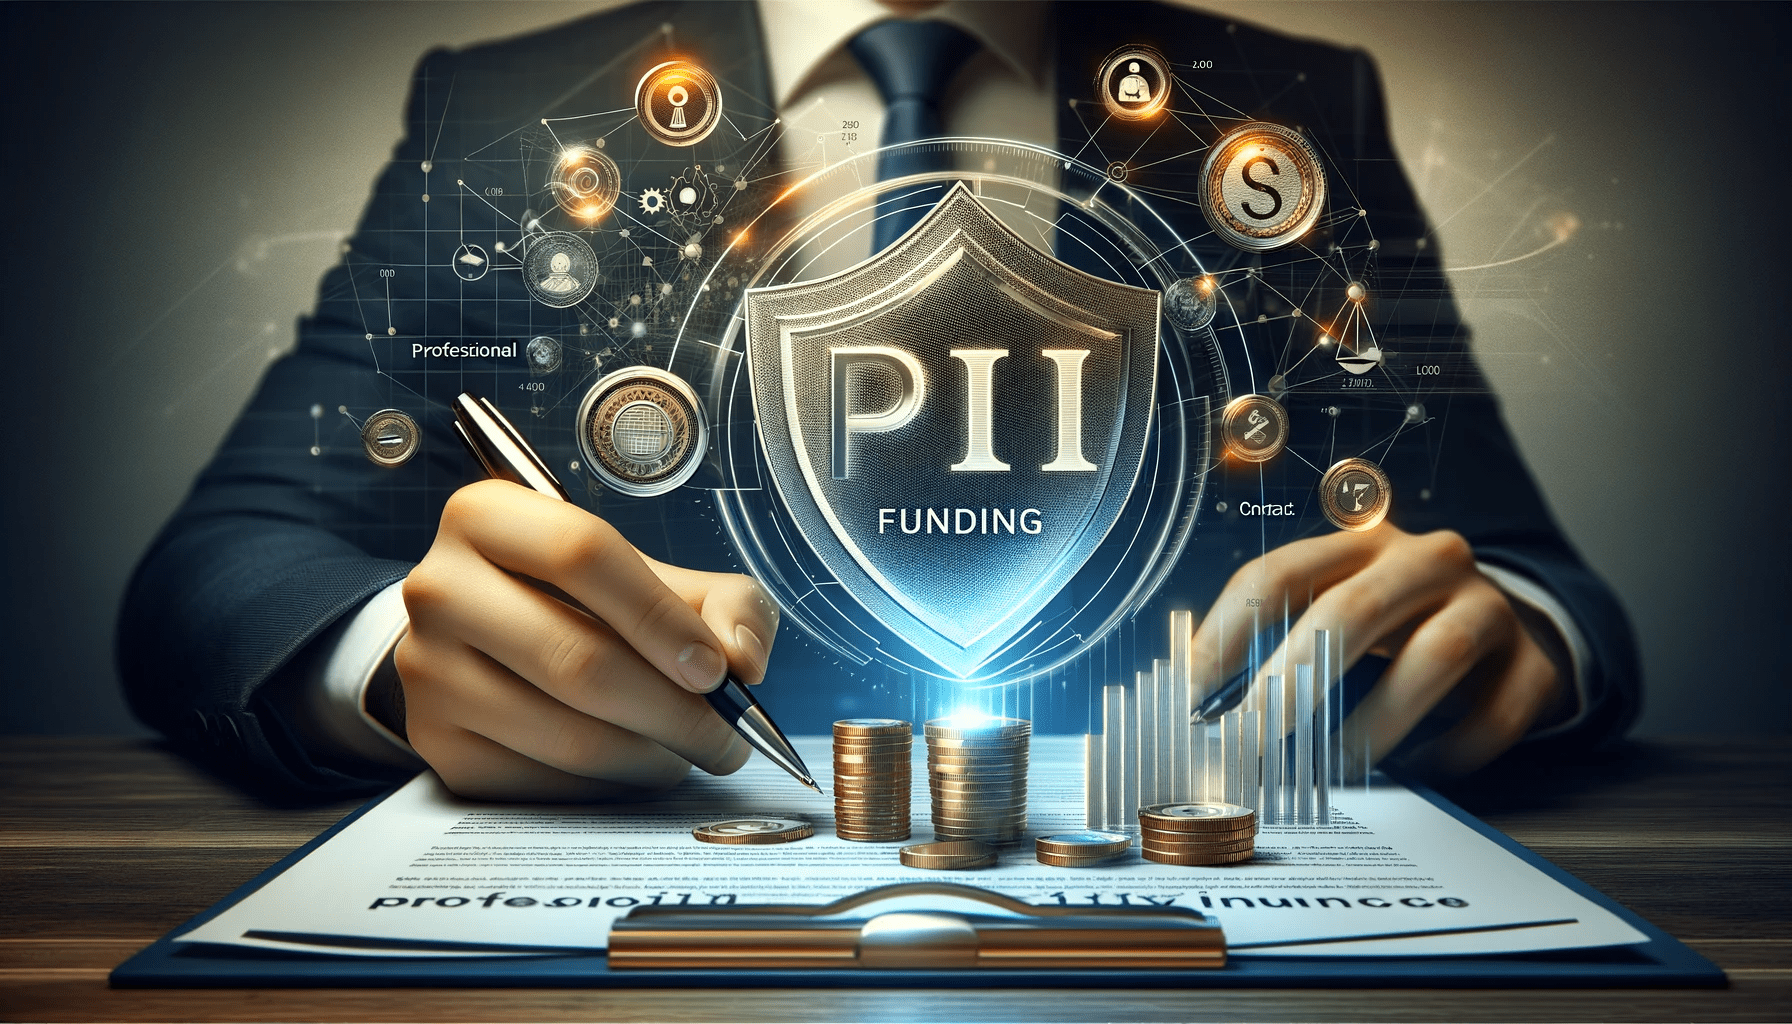 Professional Indemnity Insurance (PII) Funding